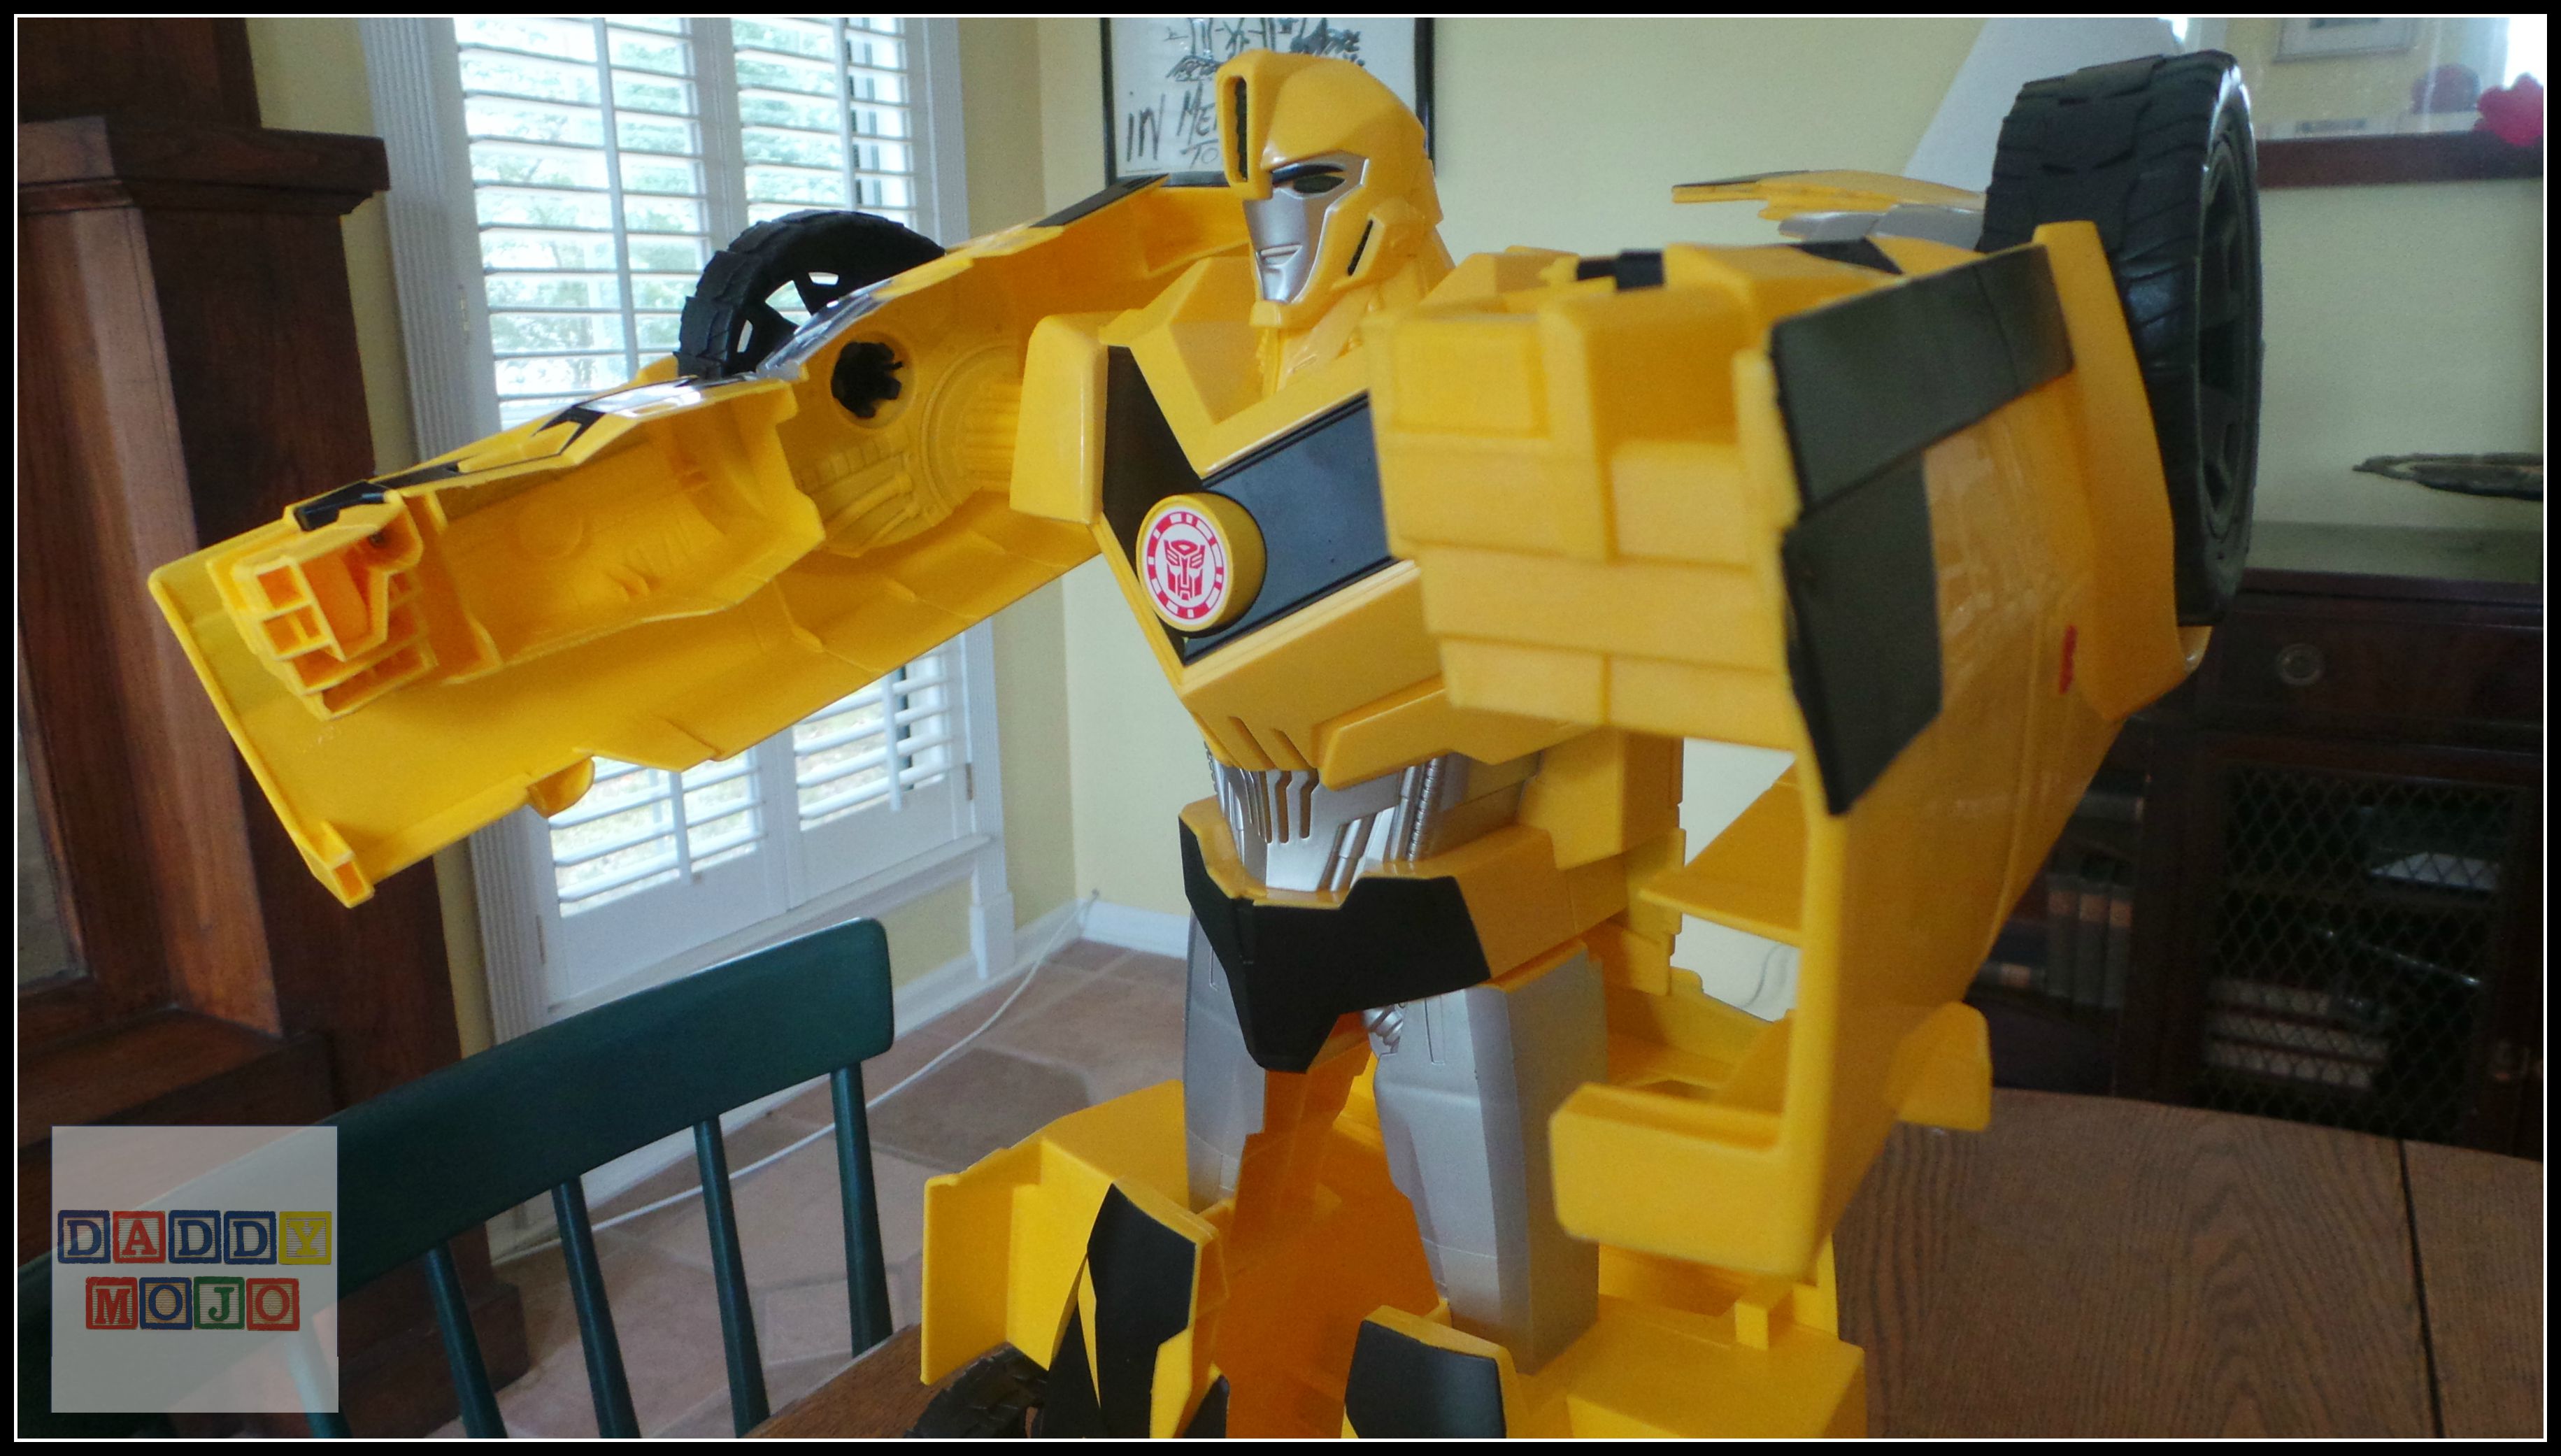 big transformer robot toy